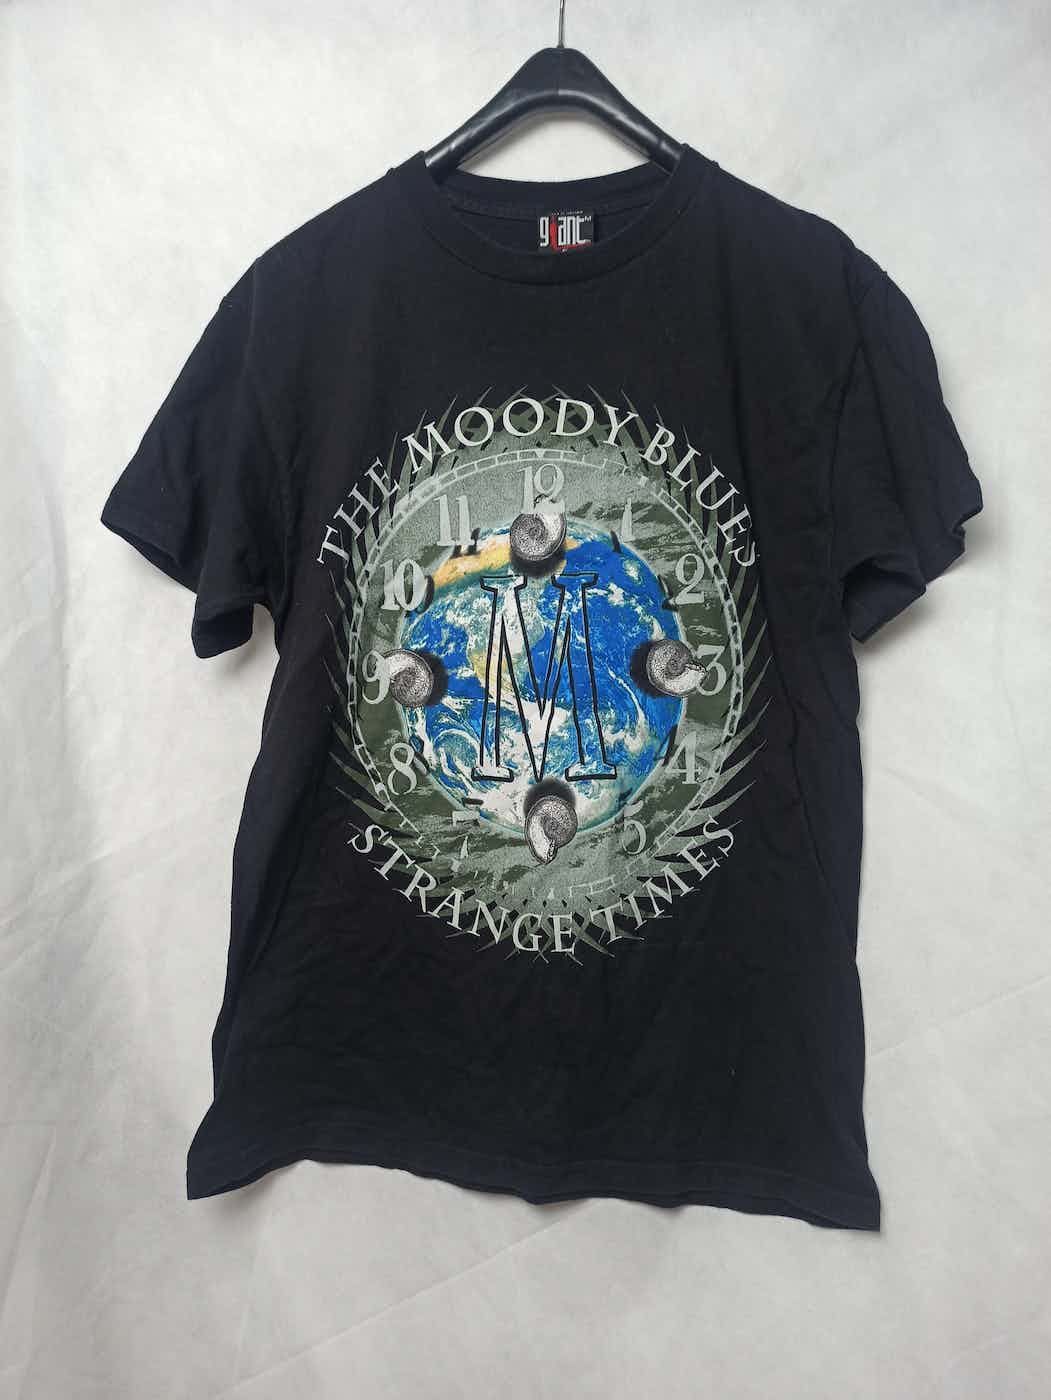 Vintage 1999 Moody Blues Strange Times Tour concert T-shirt